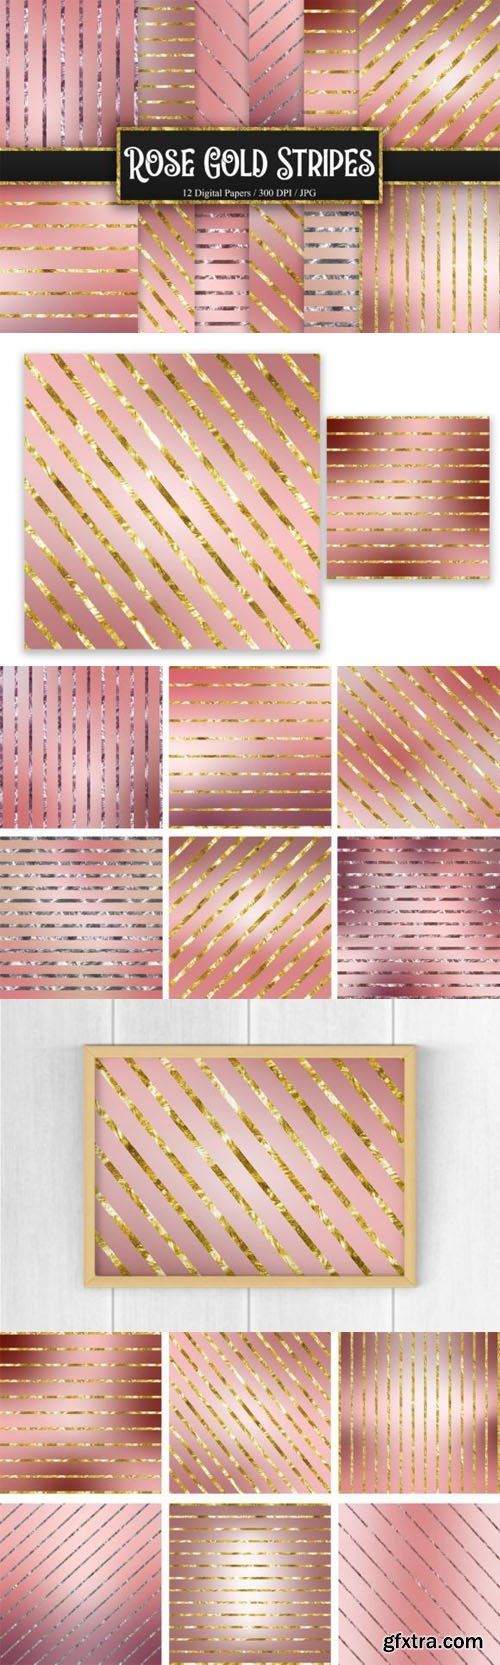 Rose Gold Stripes - 12 Glitter Backgrounds